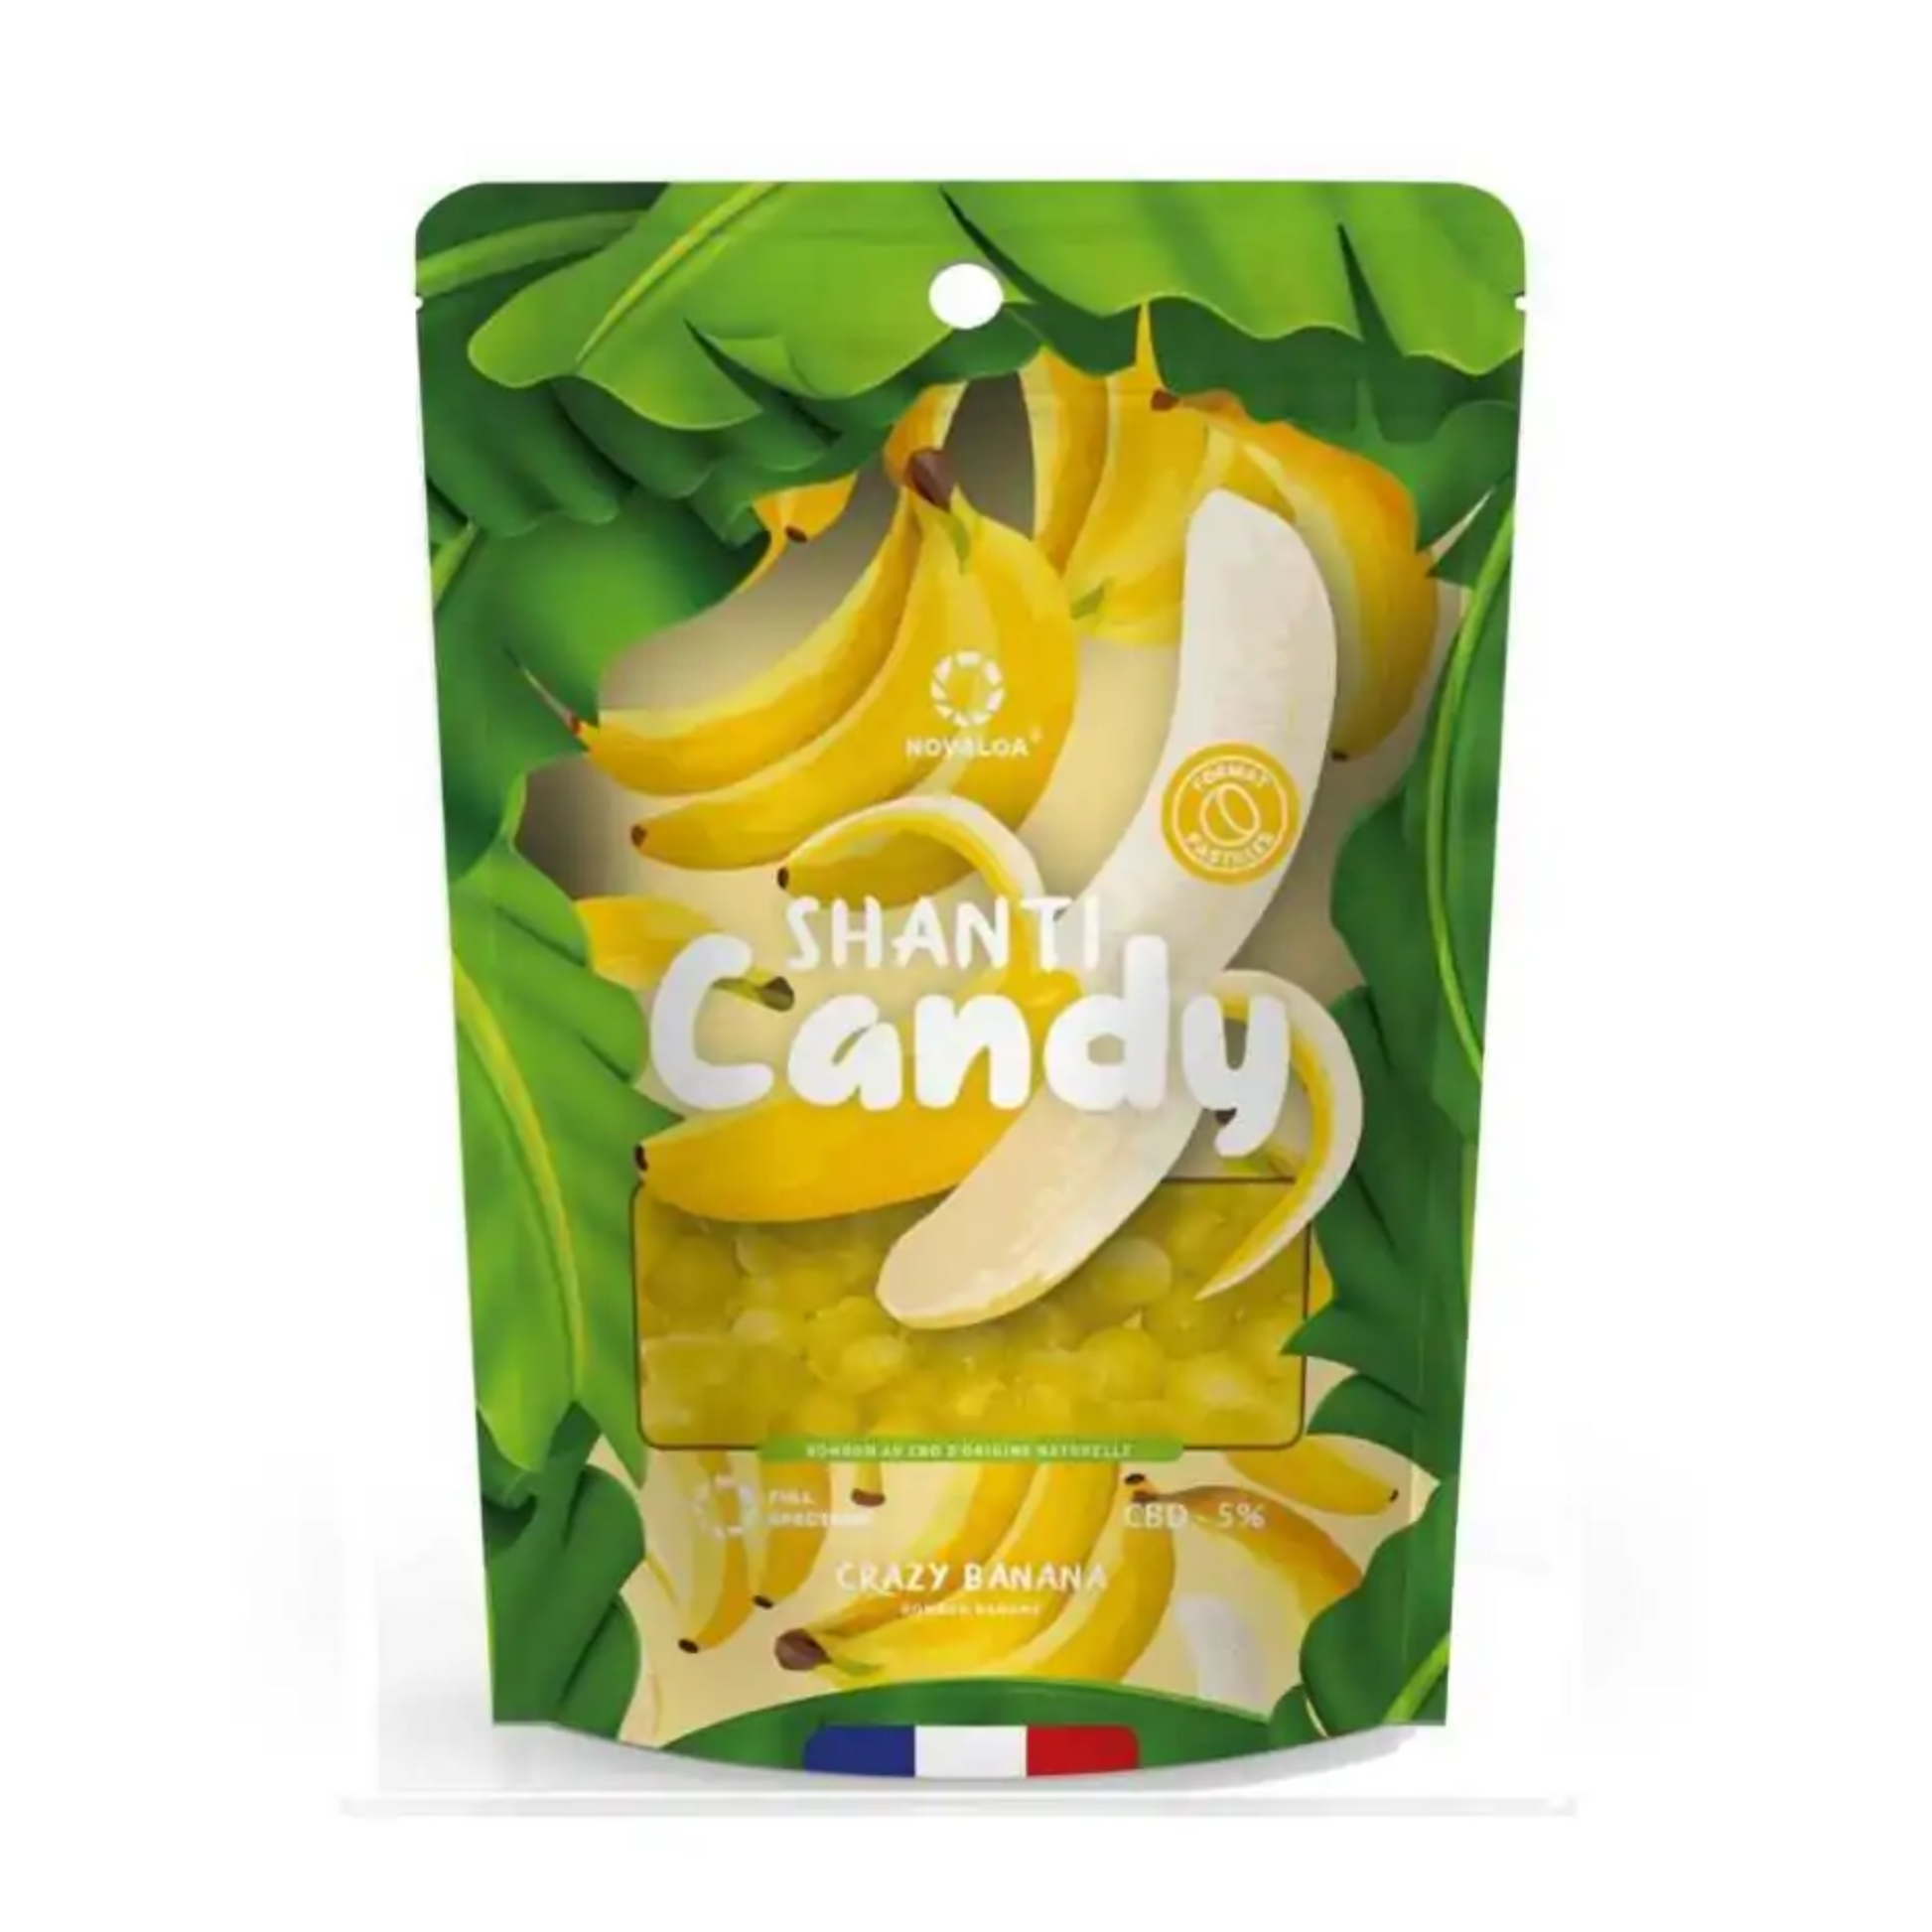 Bonbons CBD saveur banane de la marque Novaloa